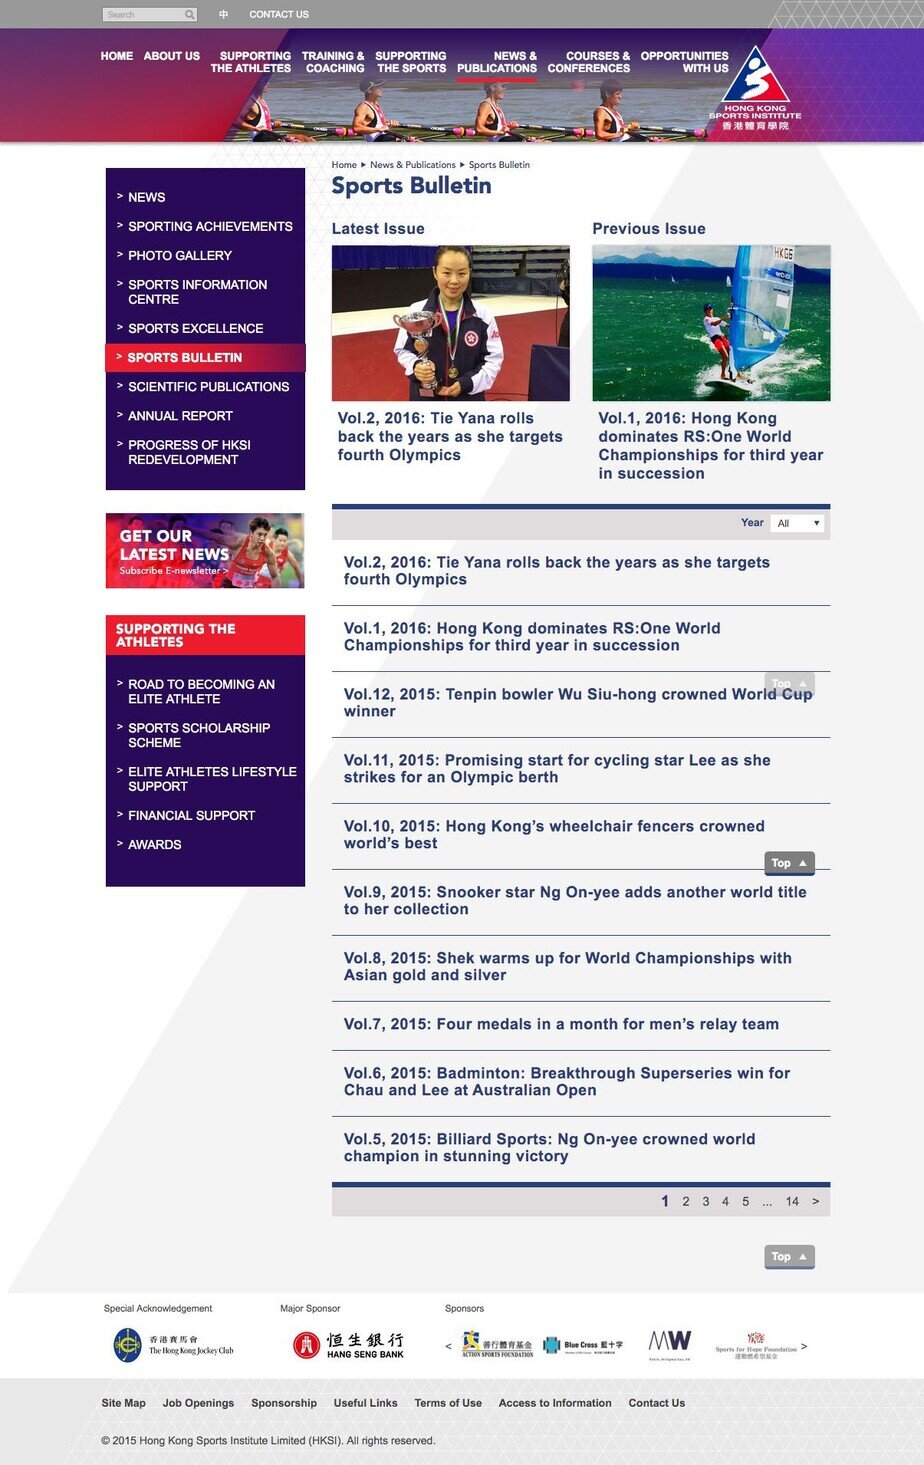 Hong Kong Sports Institute  website screenshot for desktop version 5 of 7